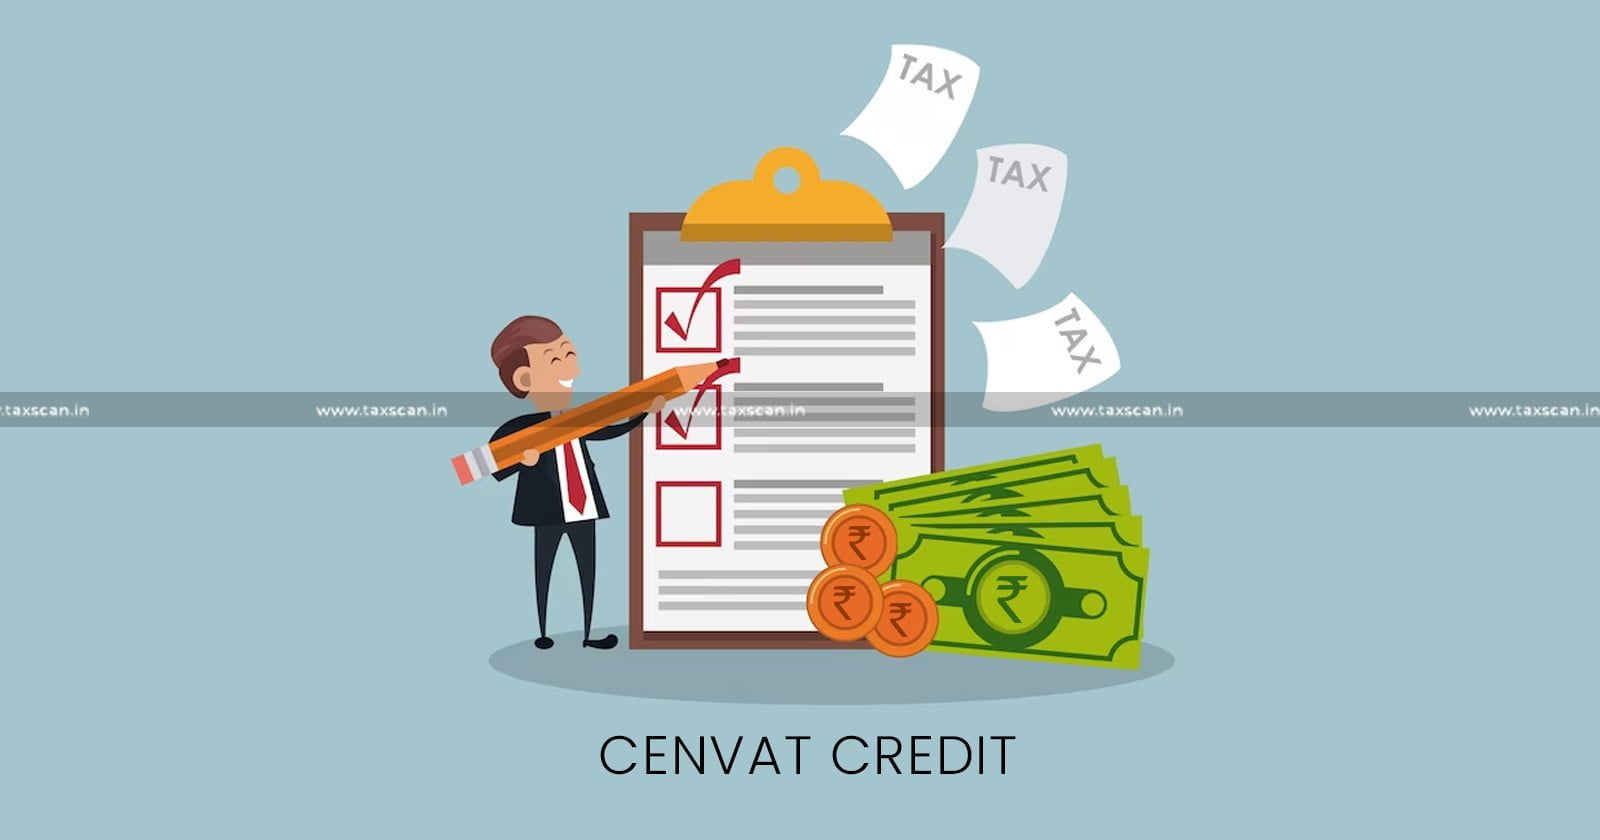 Refund - cenvat - credit - service - tax - return - CESTAT - TAXSCAN